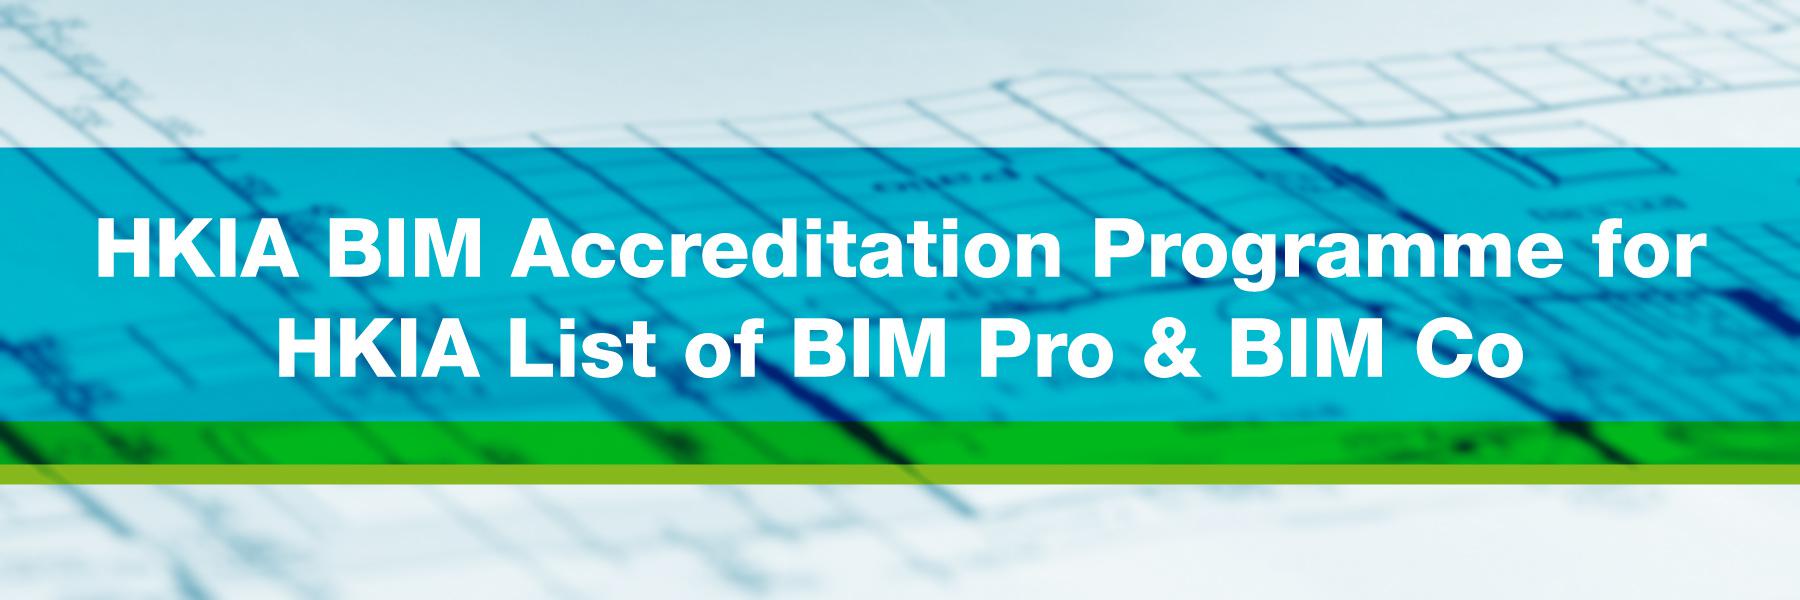 HKIA BIM Accreditation Programme for HKIA List of BIM Pro & BIM Co